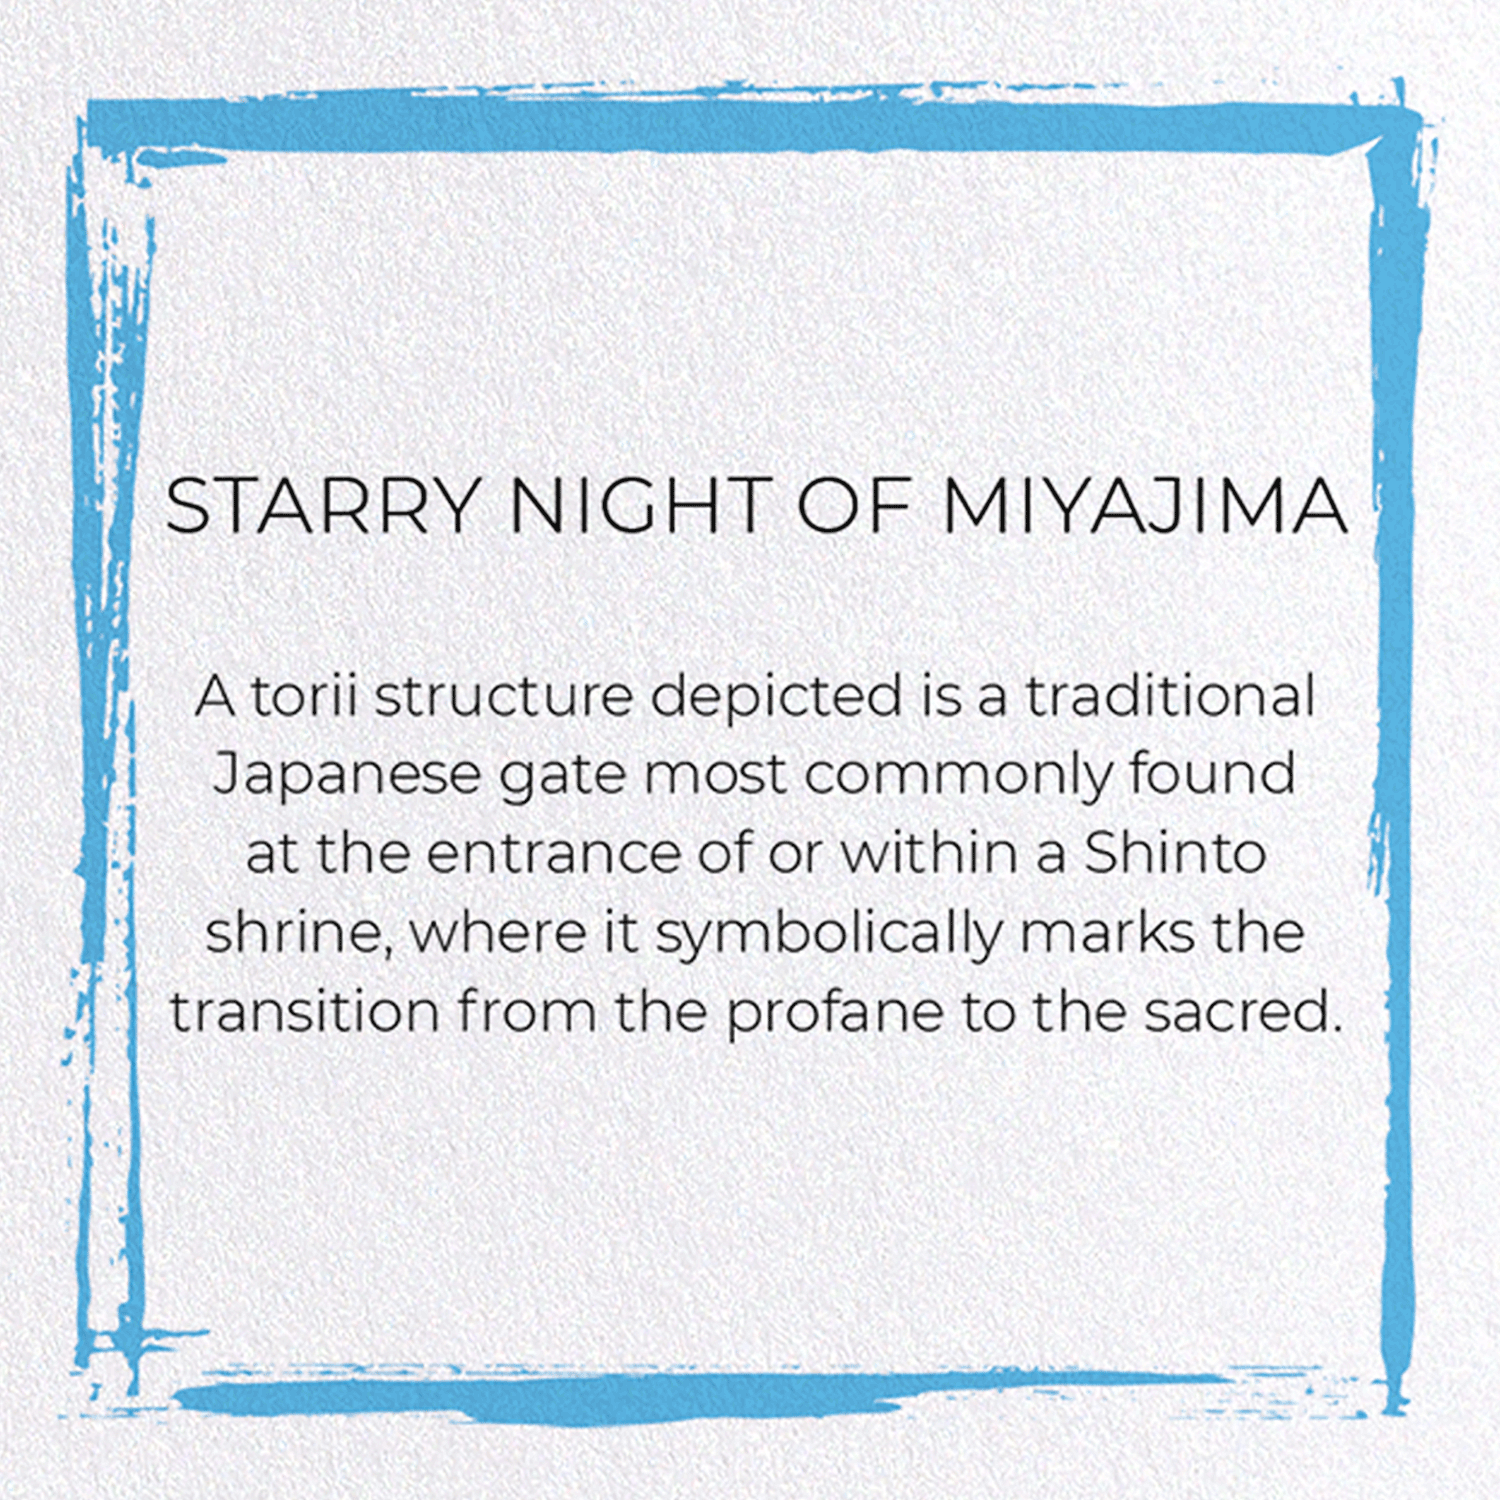 STARRY NIGHT OF MIYAJIMA